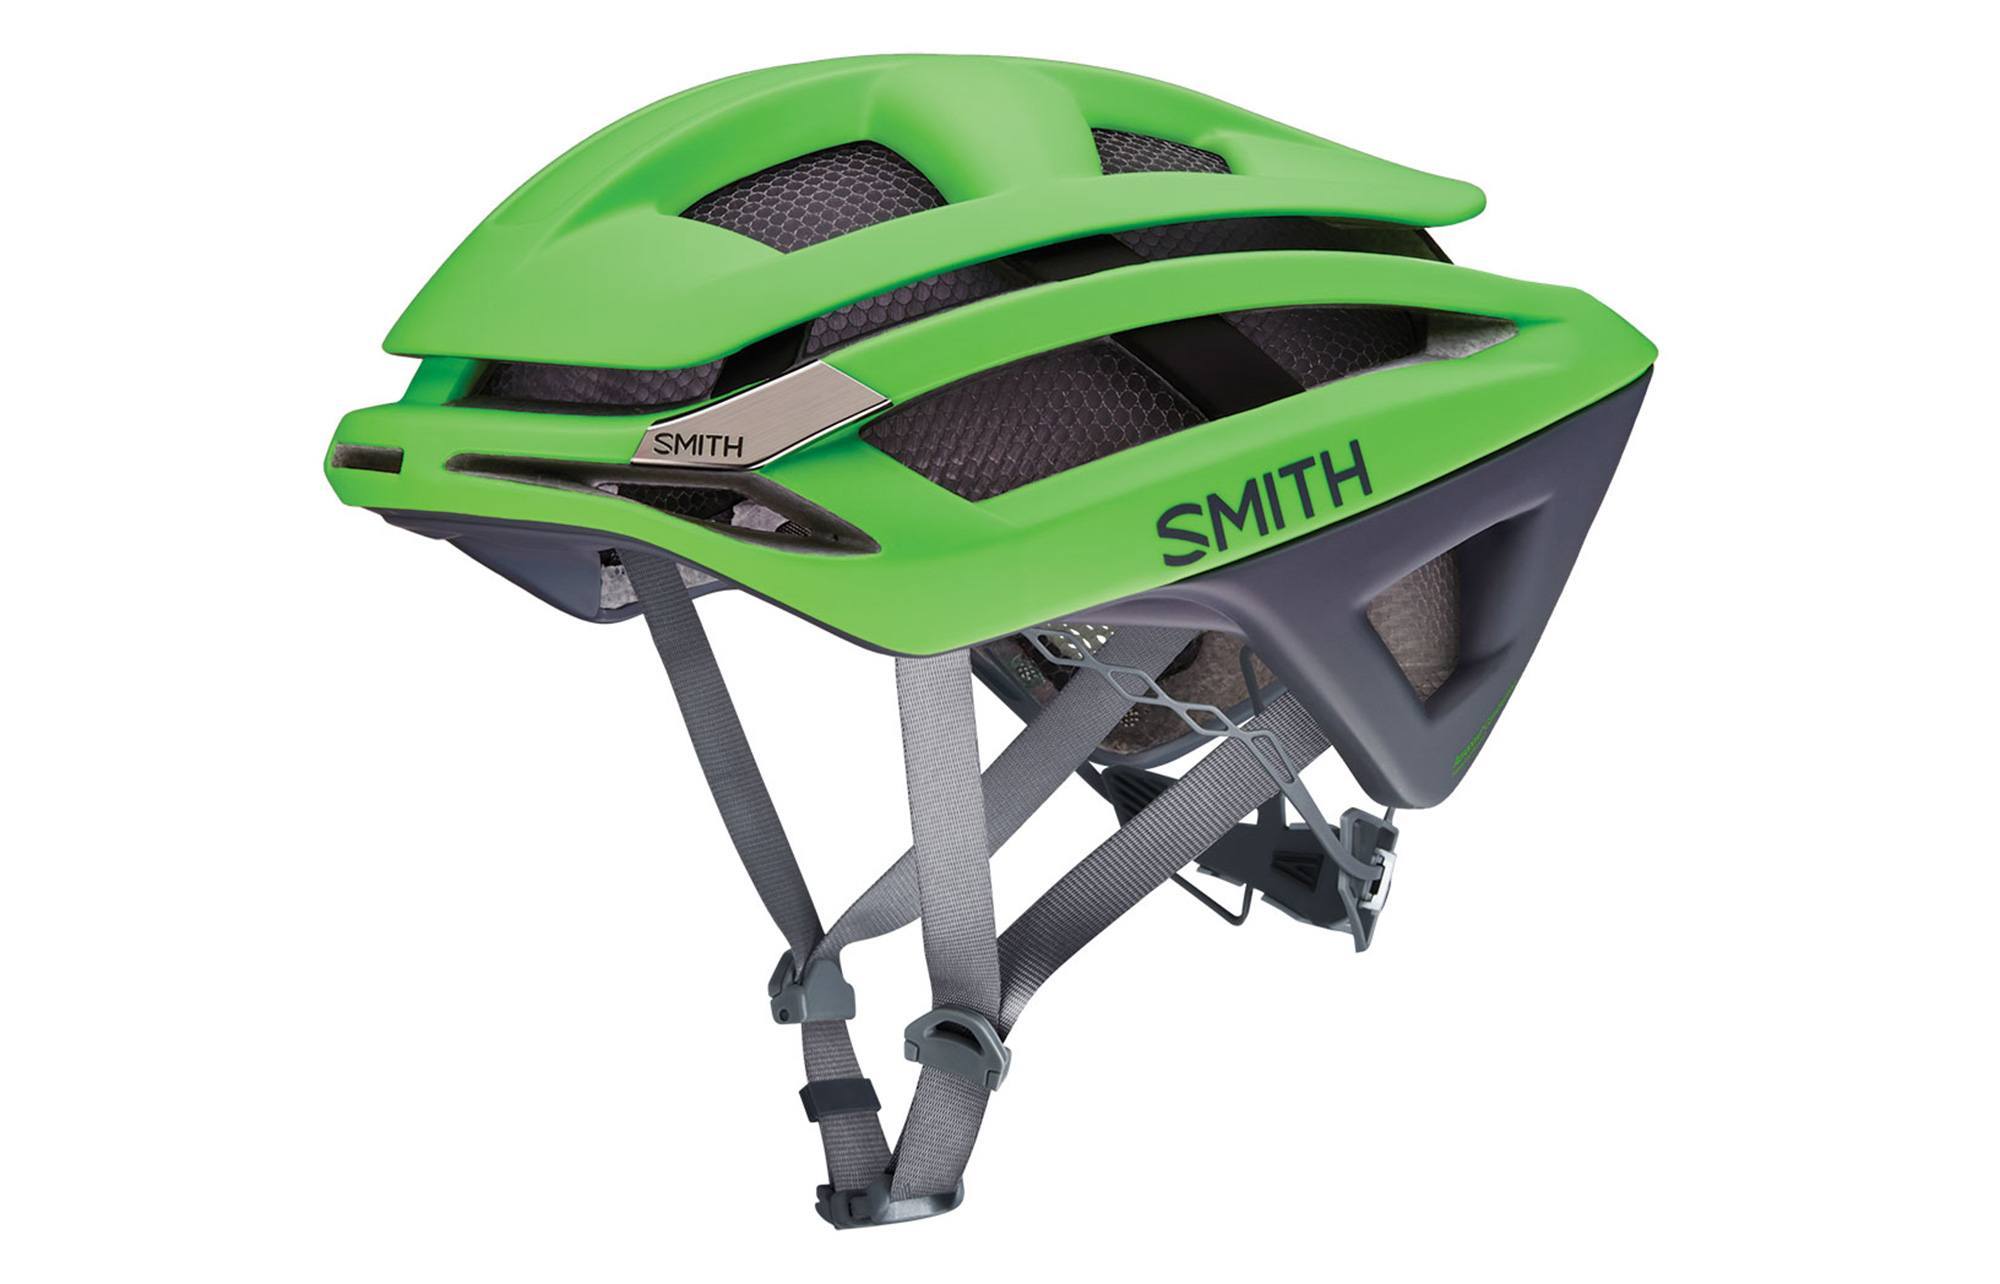 Smith Overtake helmet replacement pad